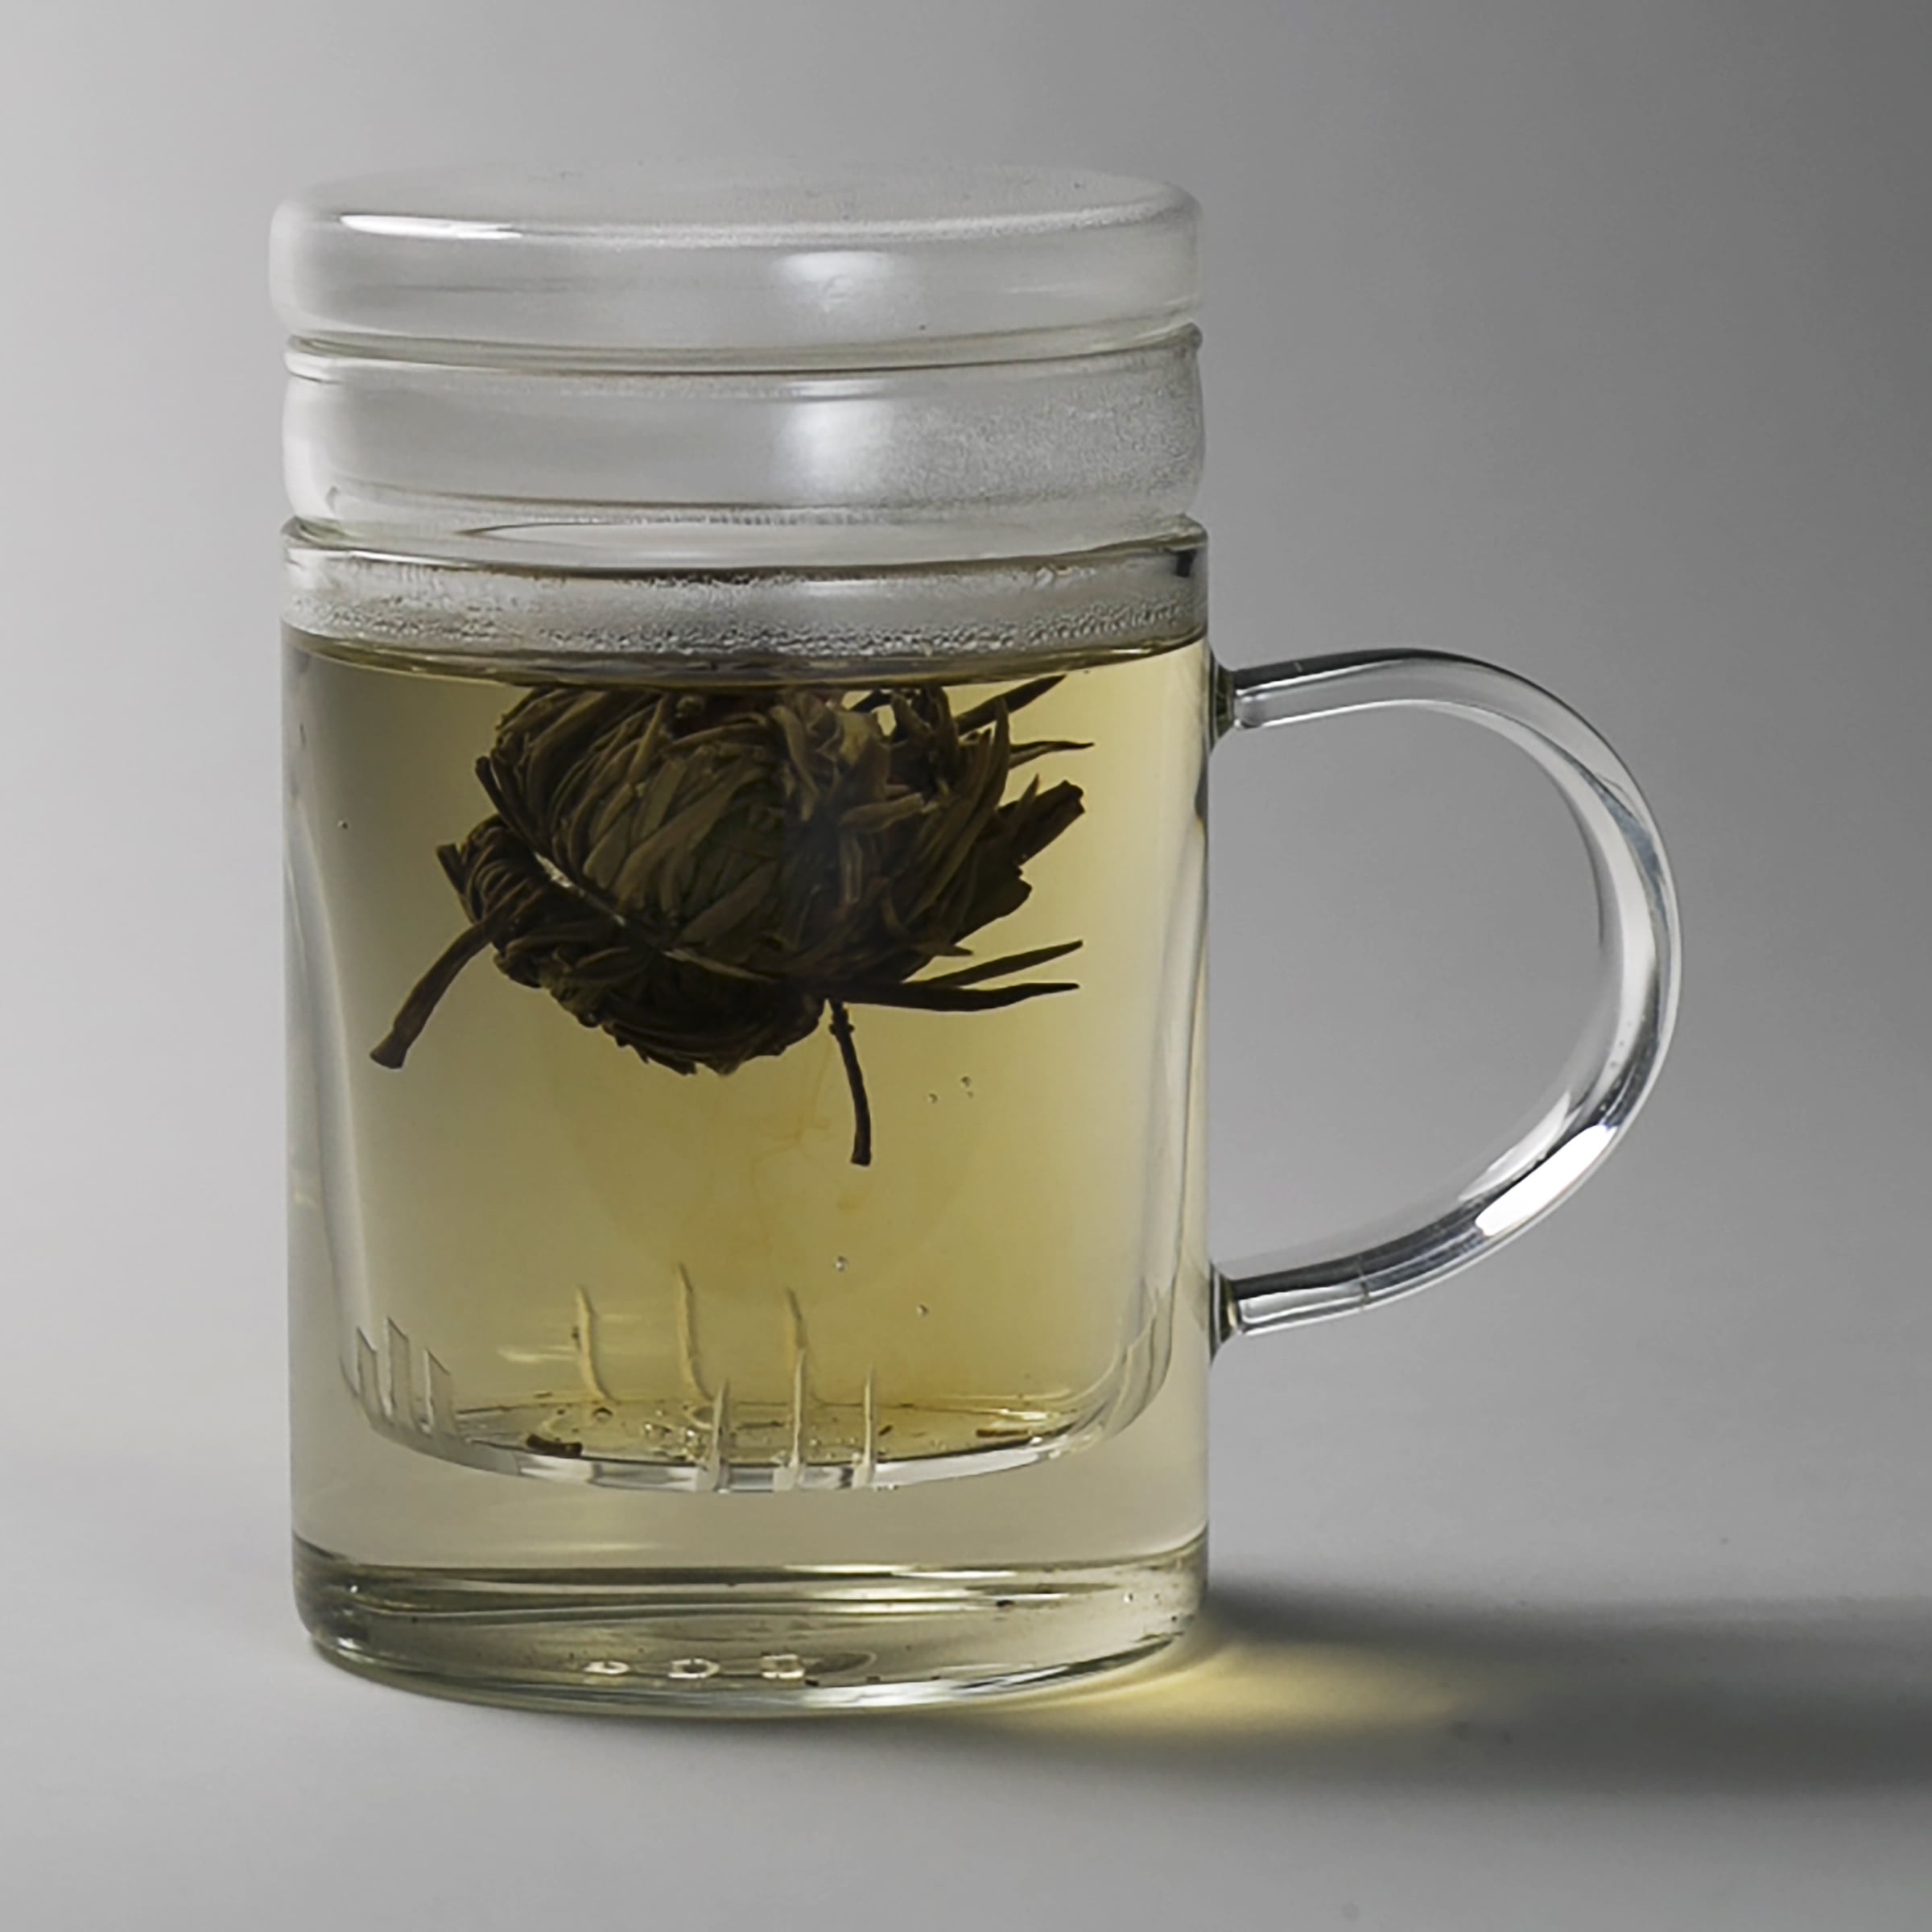 Primula Big Iced Tea Pitcher - The Republic of Tea | (1) 1 gal. Pitcher